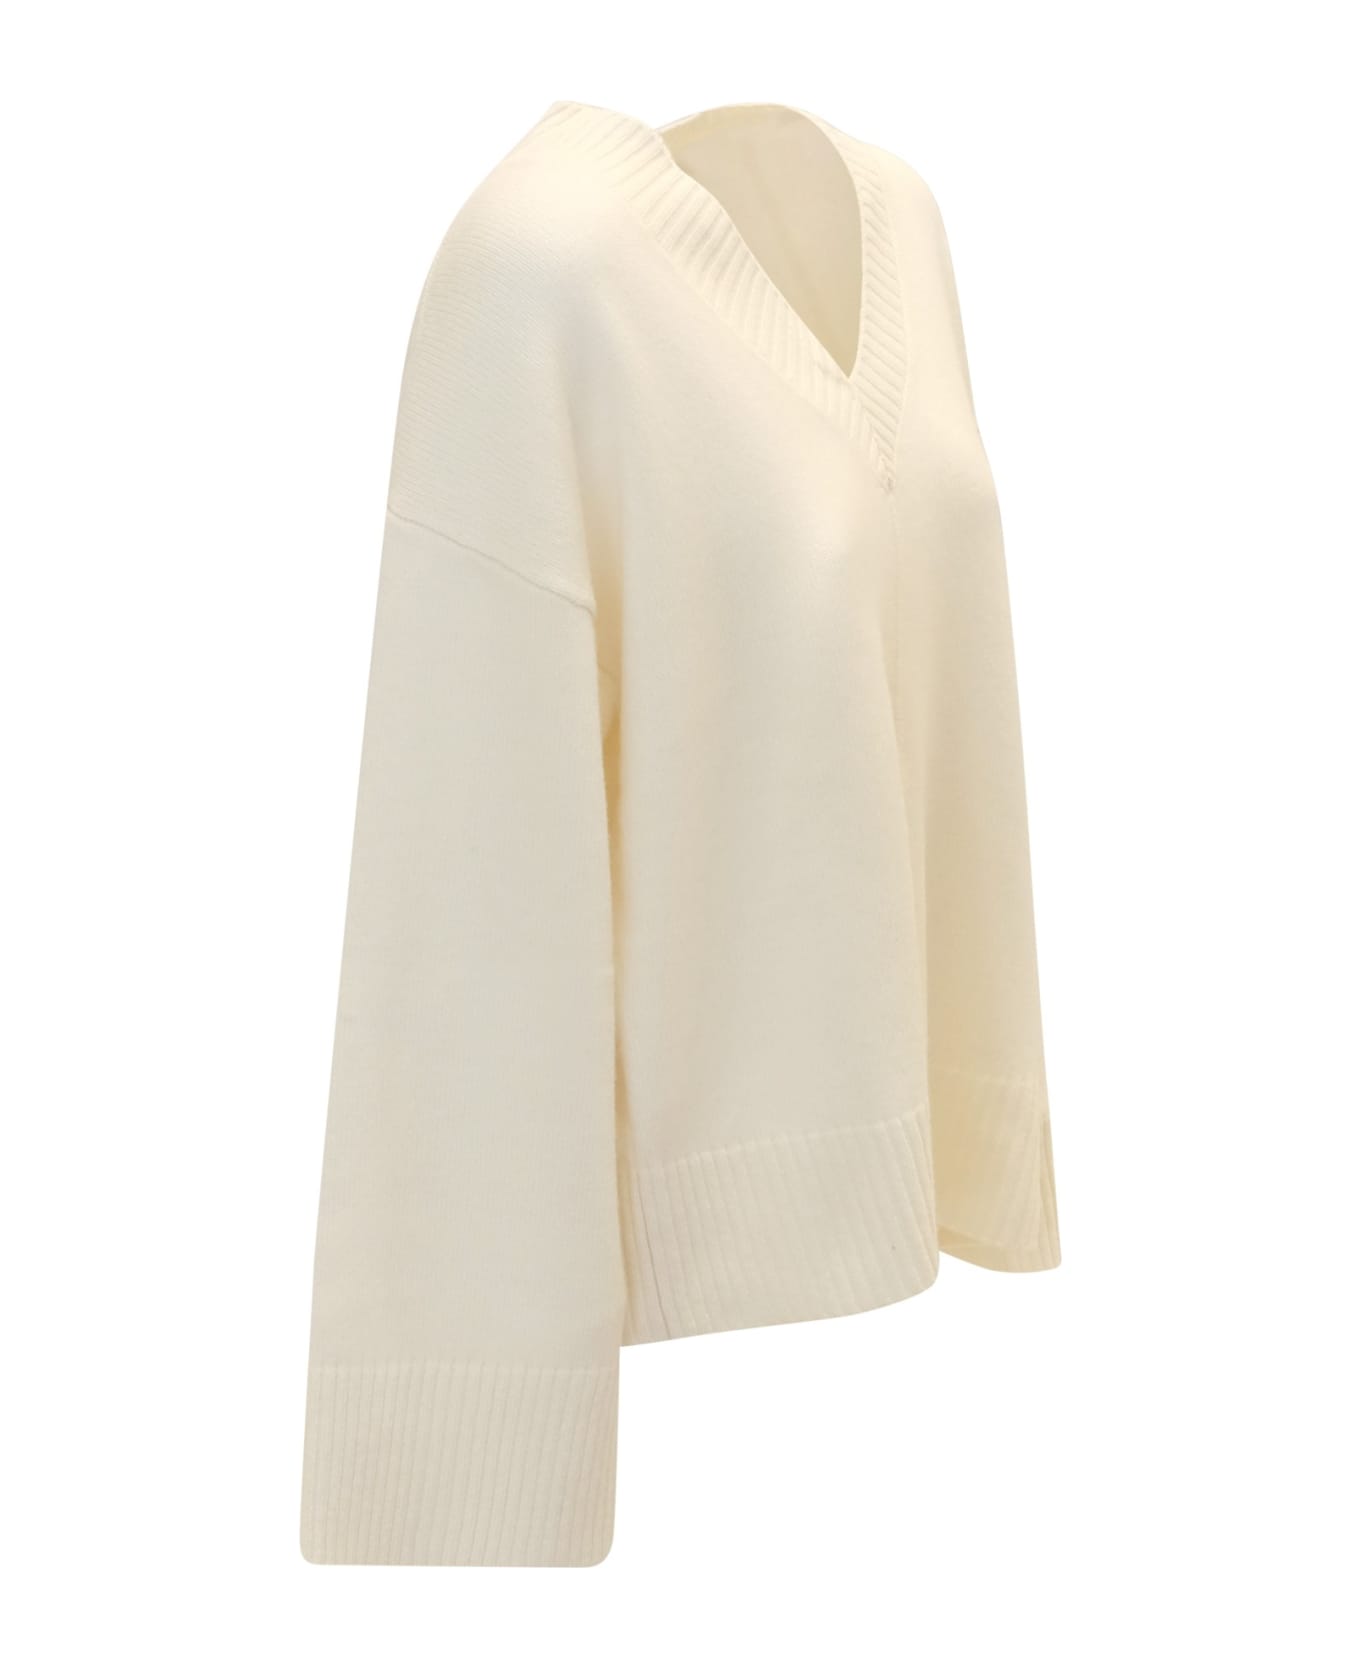 Parosh Led White Sweater - WHITE ニットウェア